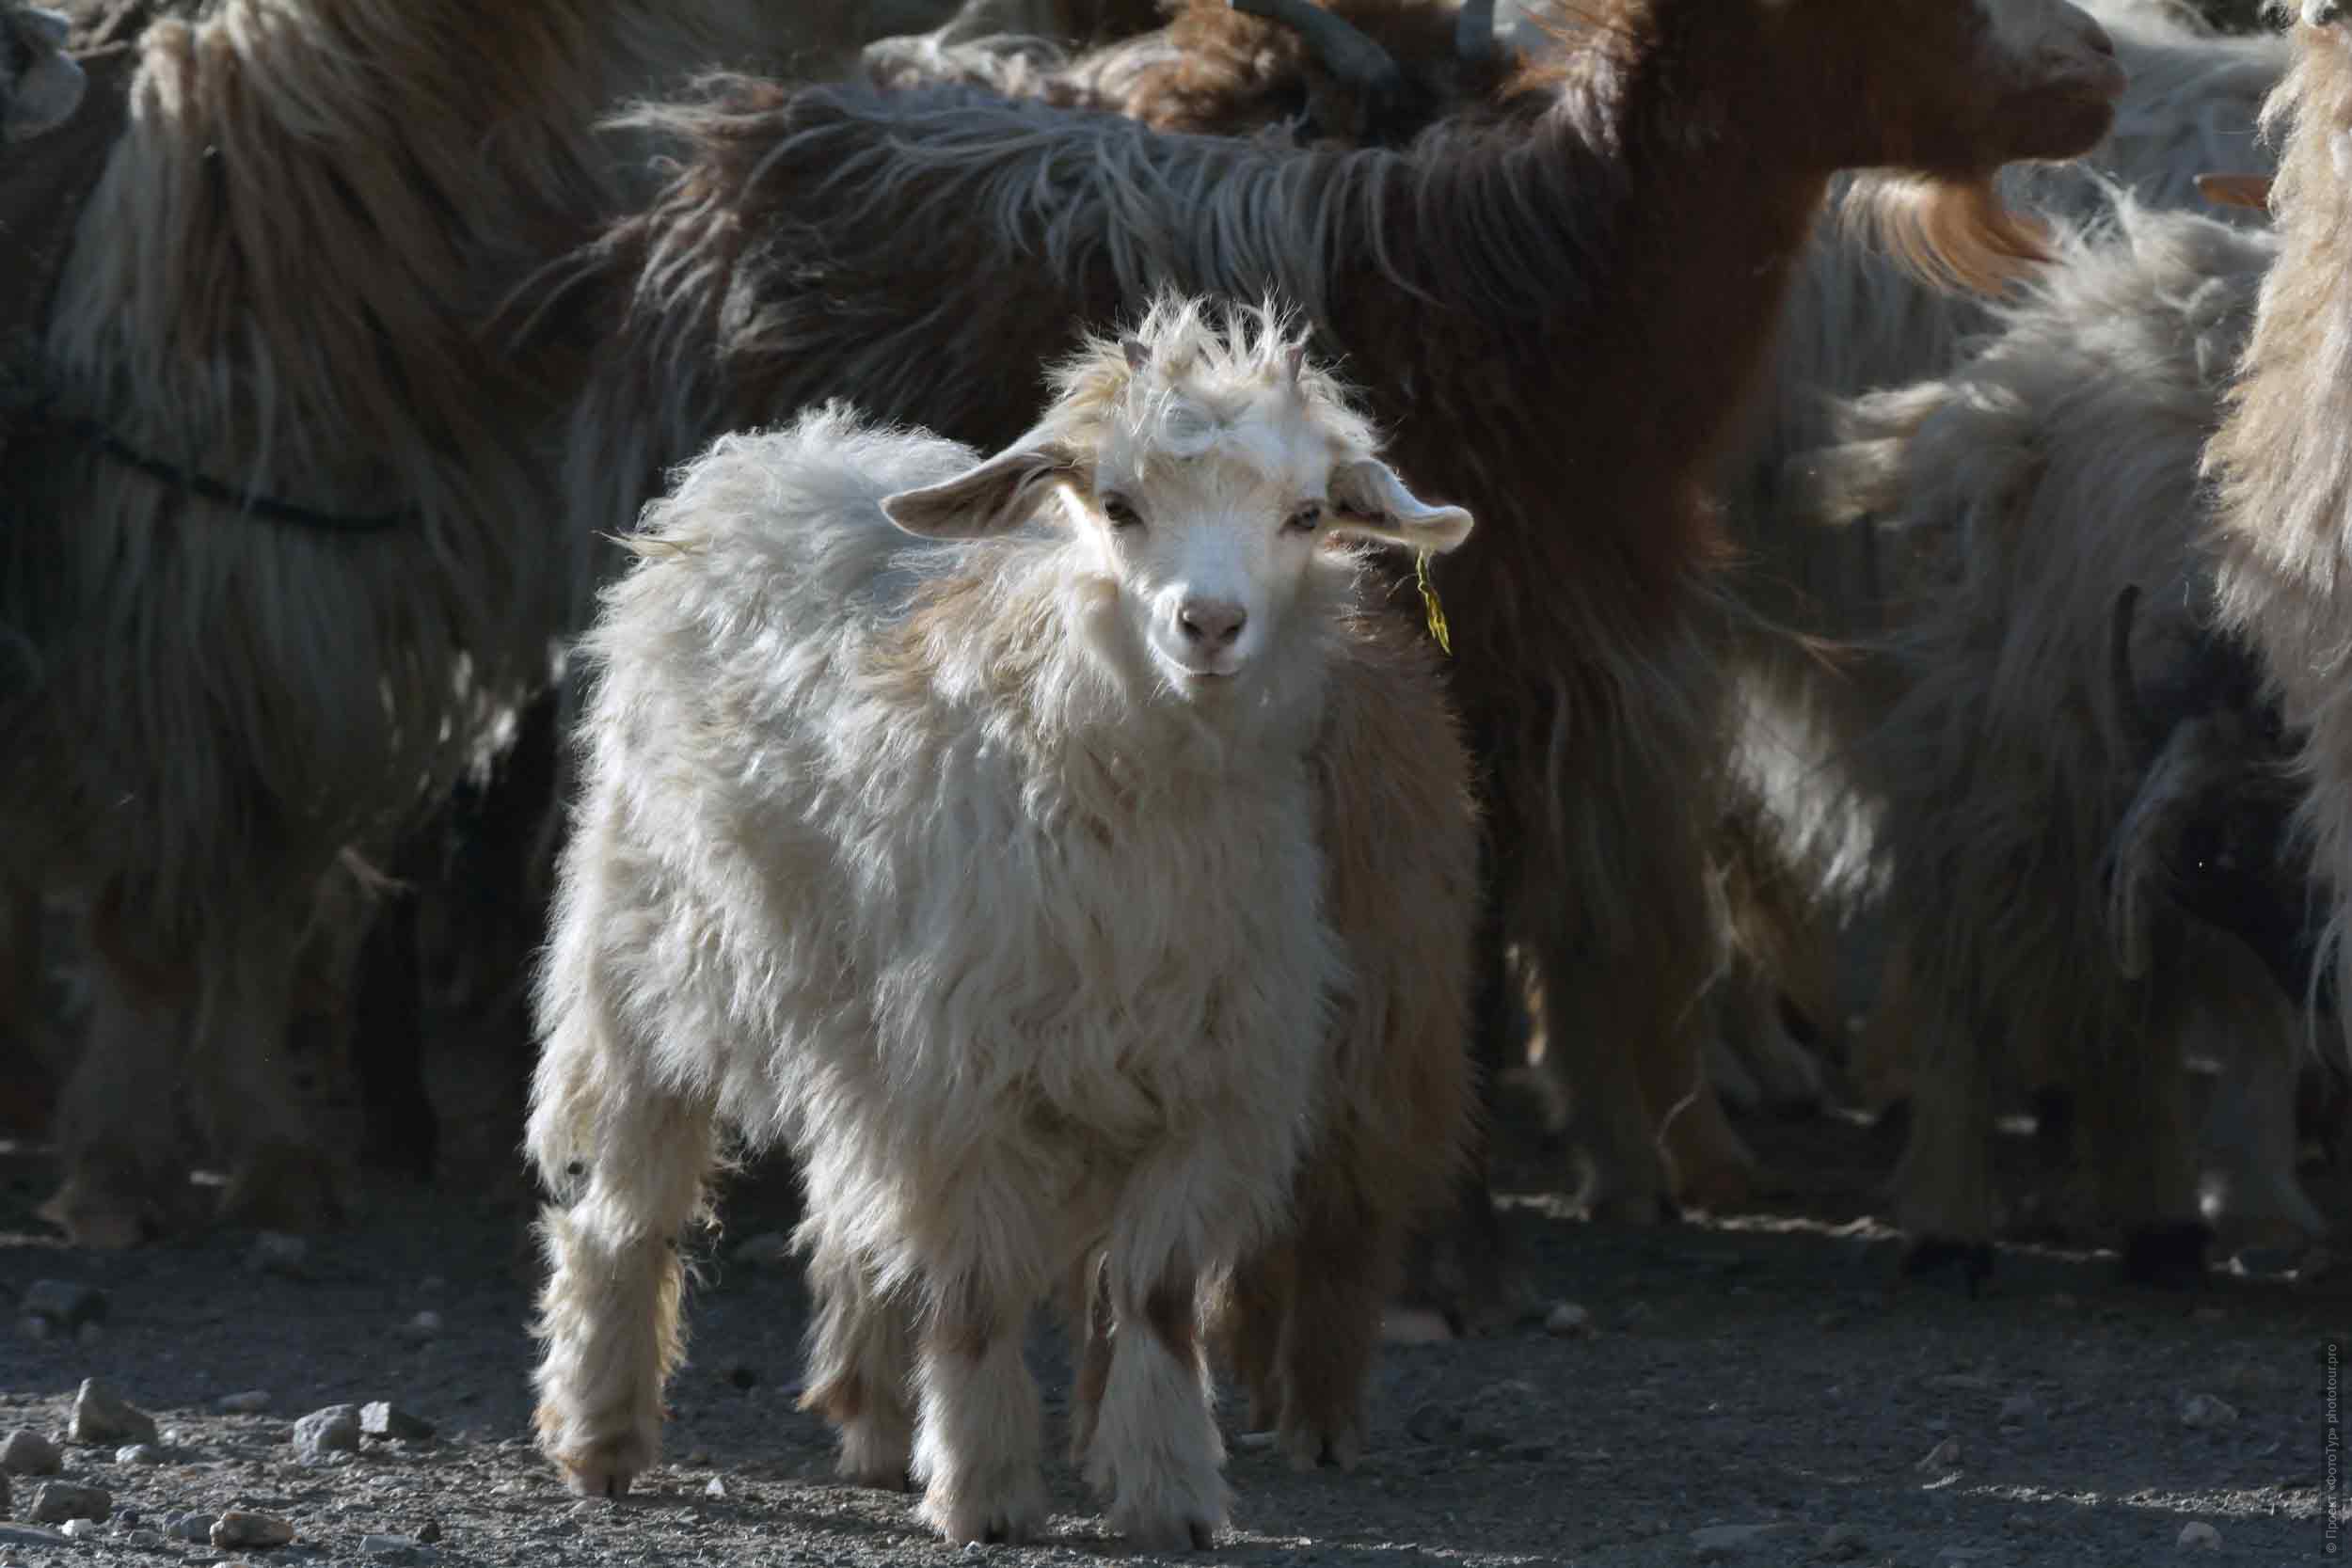 Malen Ladakh goat, Ladakh womens tour, August 31 - September 14, 2019.